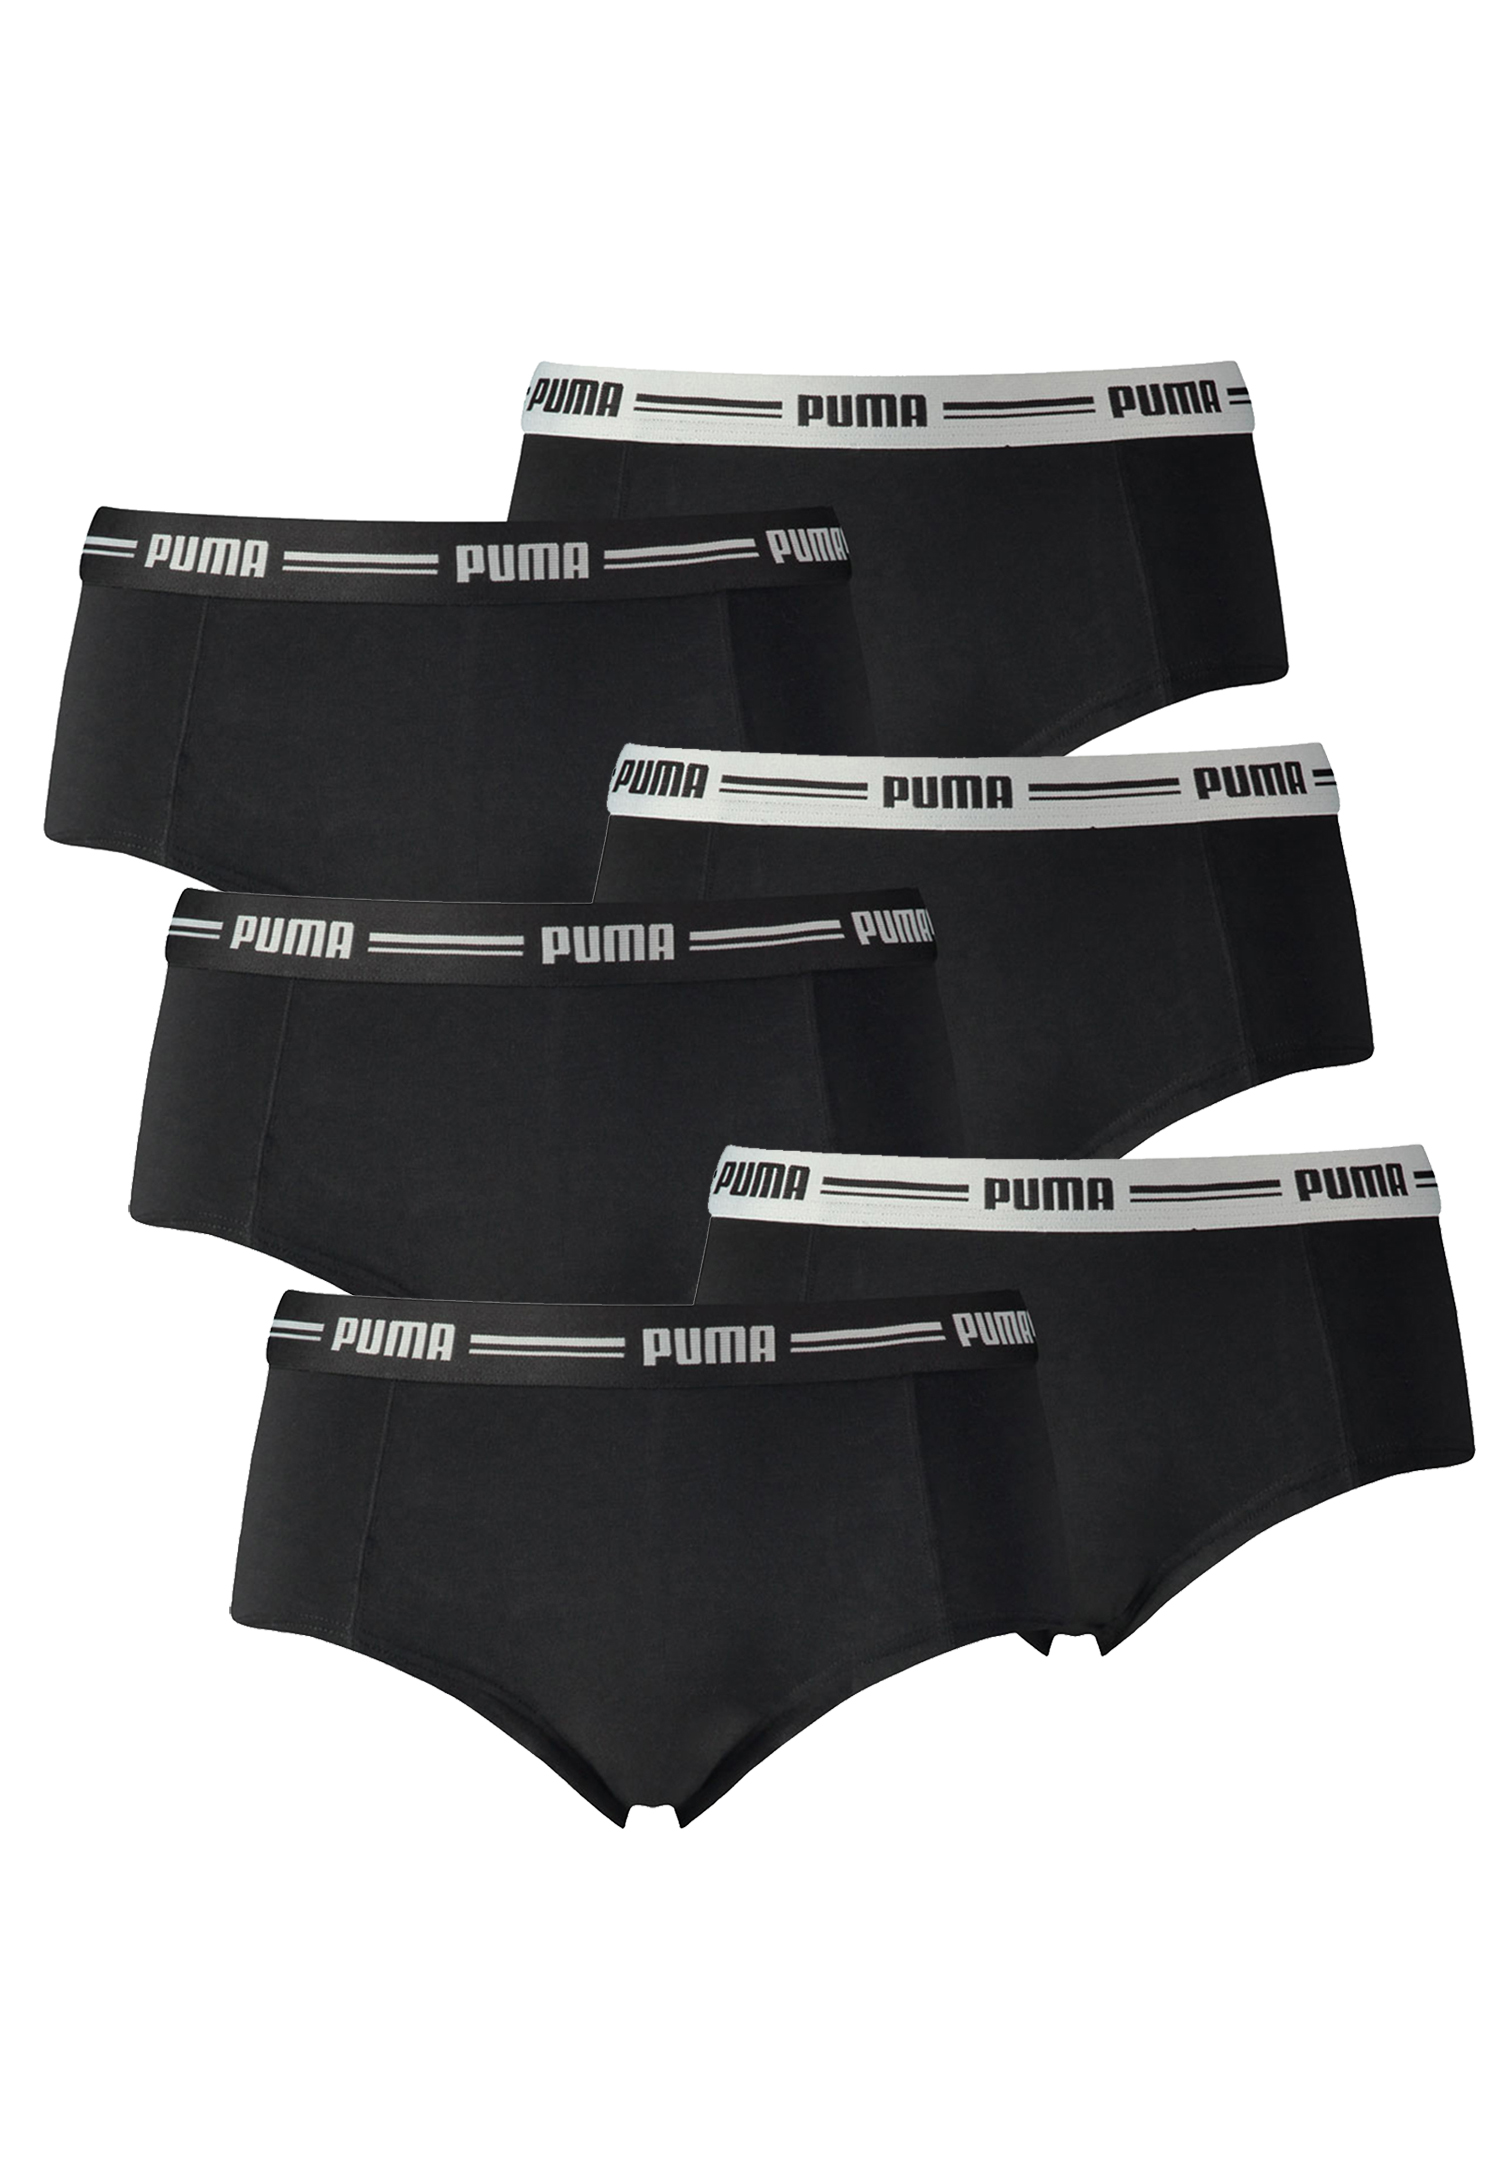 6er Pack Puma Iconic Mini Short Damen Panty Slip Shorty Unterwäsche Unterhose